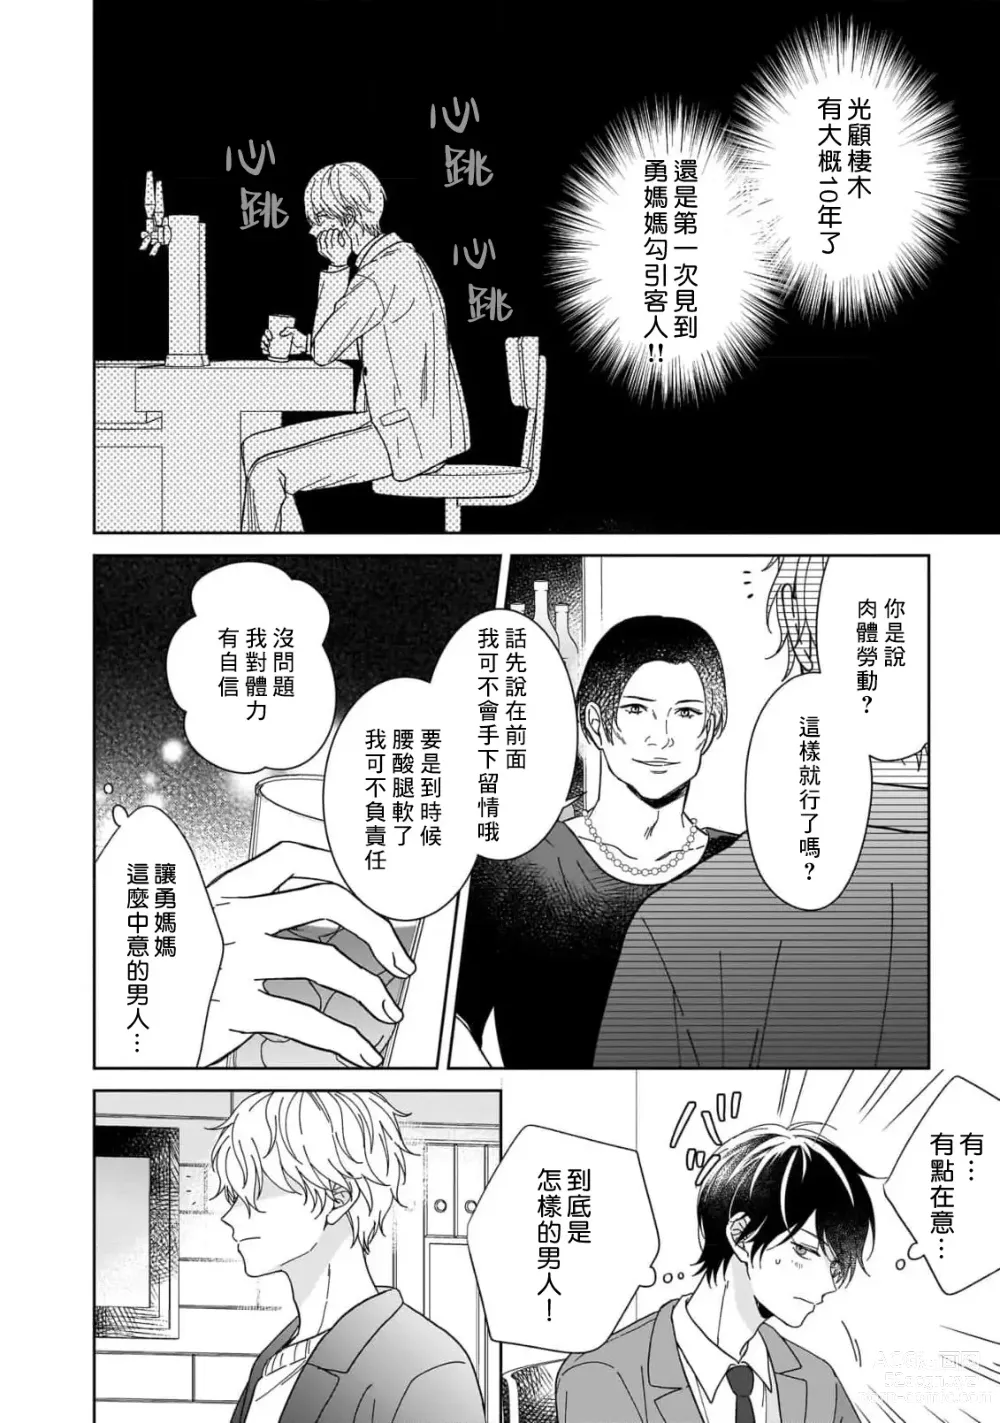 Page 6 of manga 下雨天有些许忧郁 1